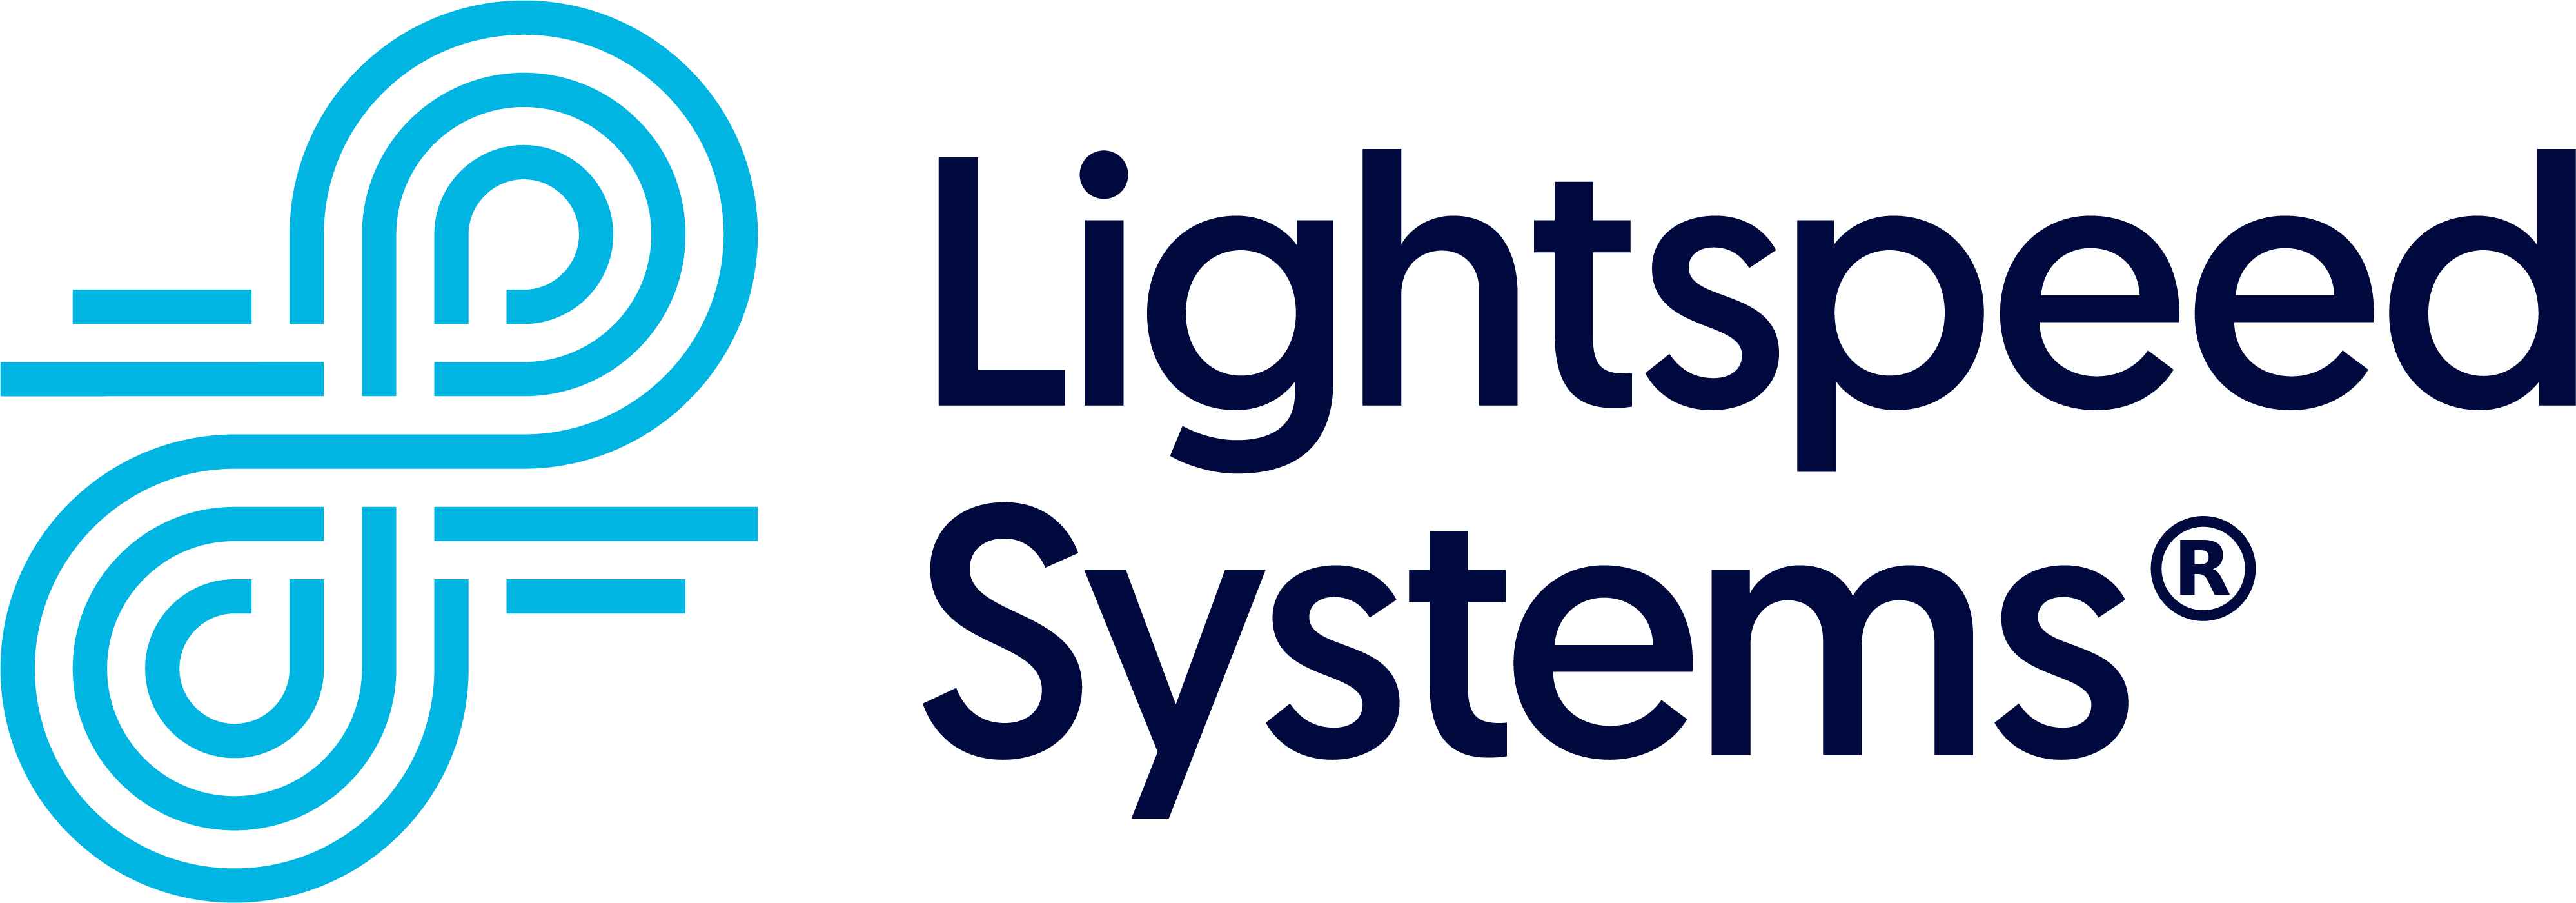 Lightspeed Systems Europe